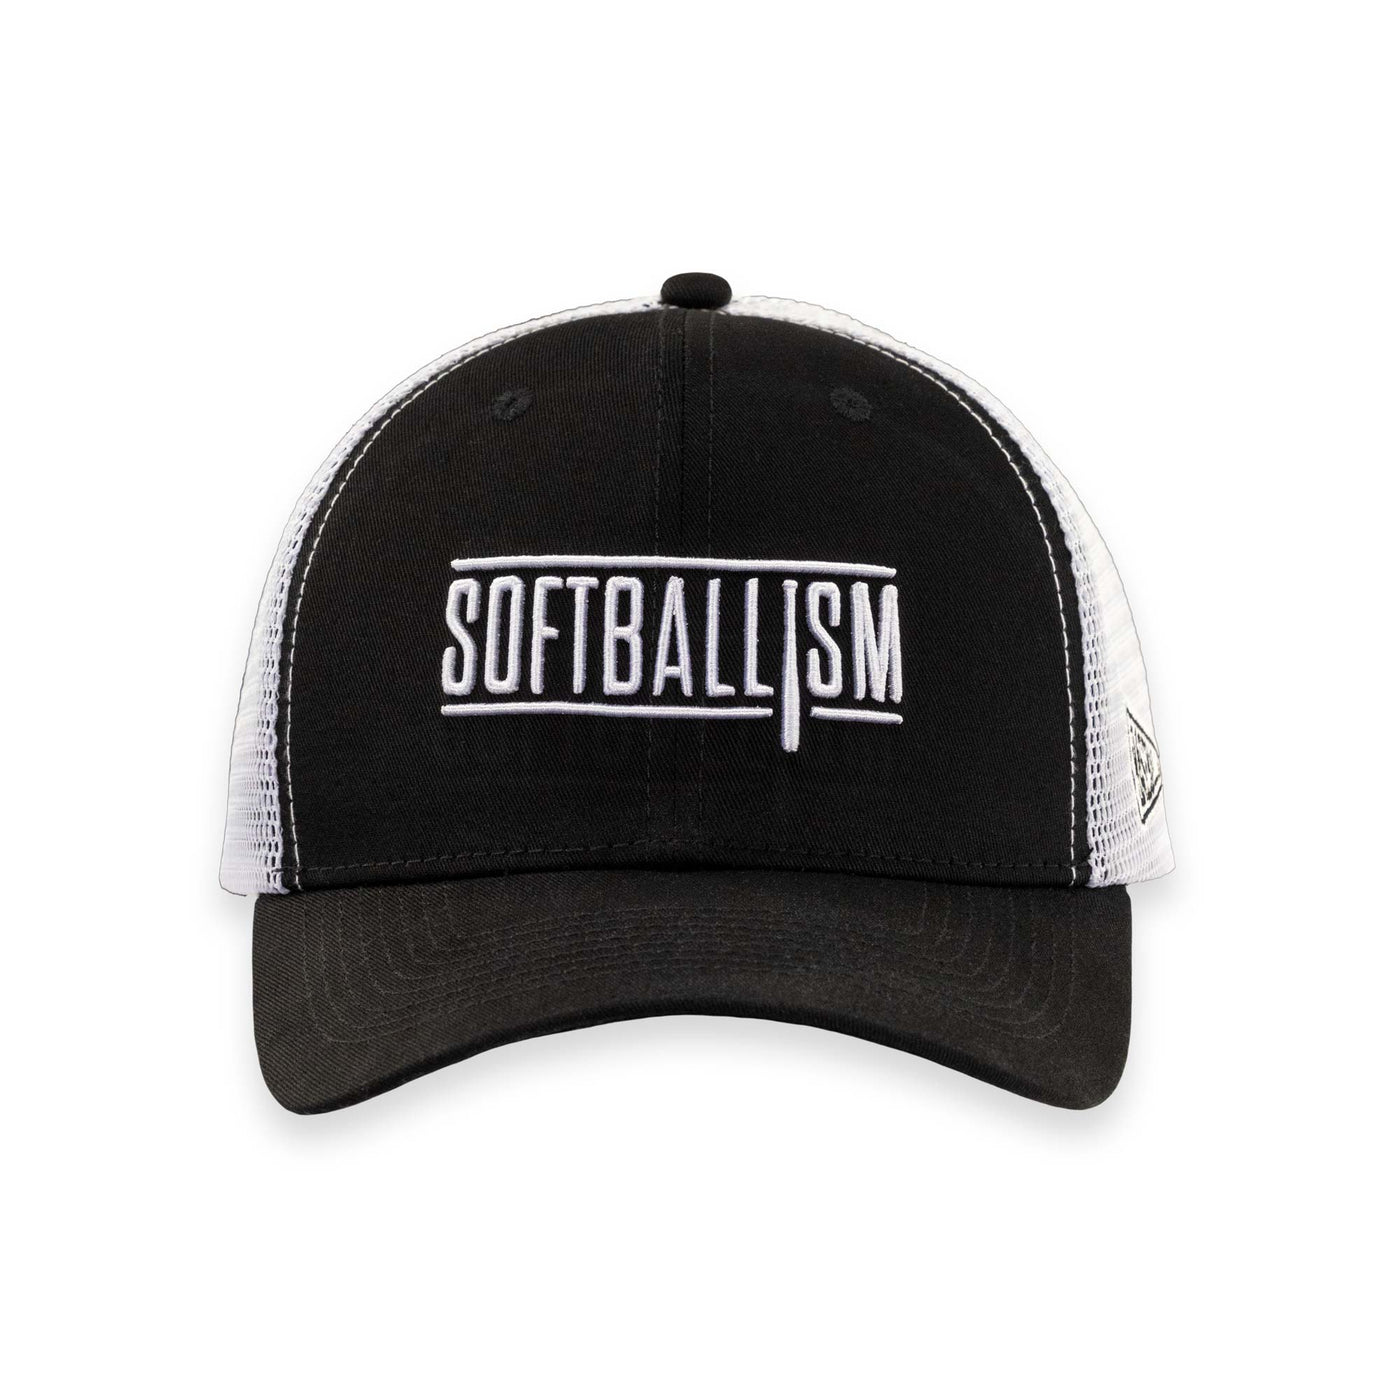 Softballism Trucker Cap